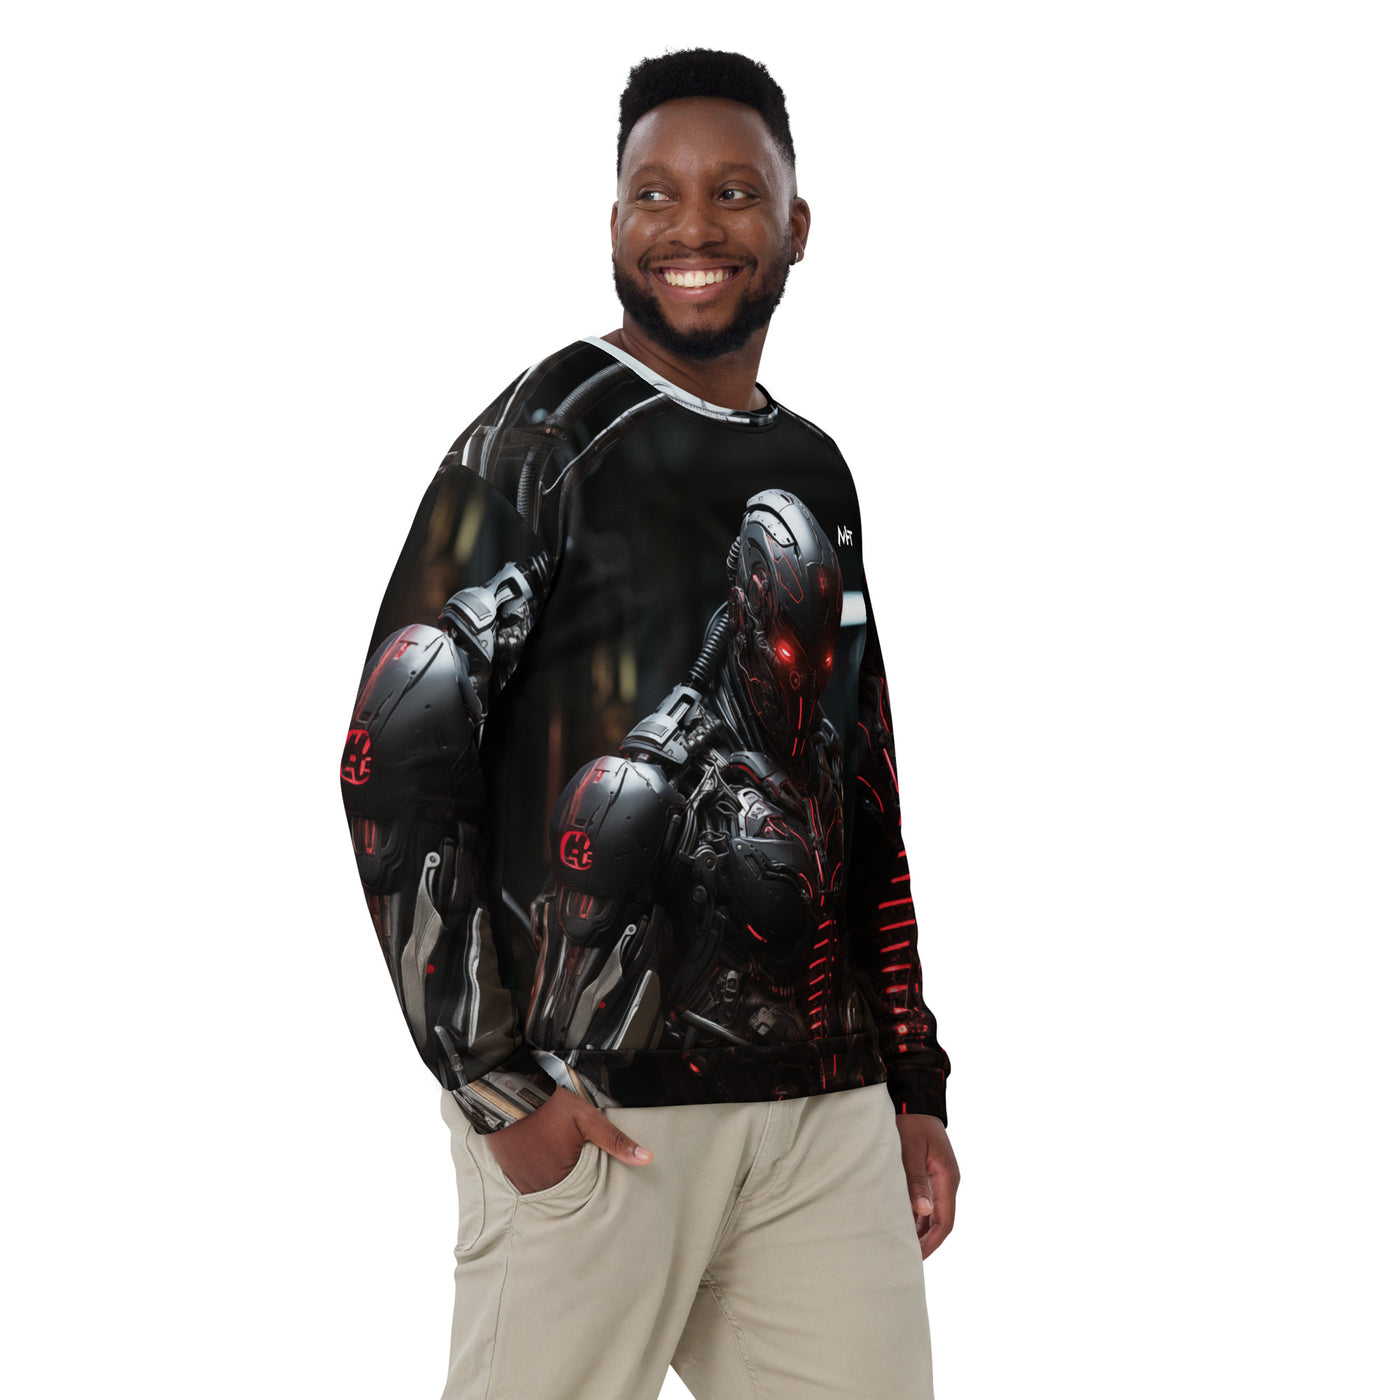 CyberArms Warrior v39 - Unisex Sweatshirt